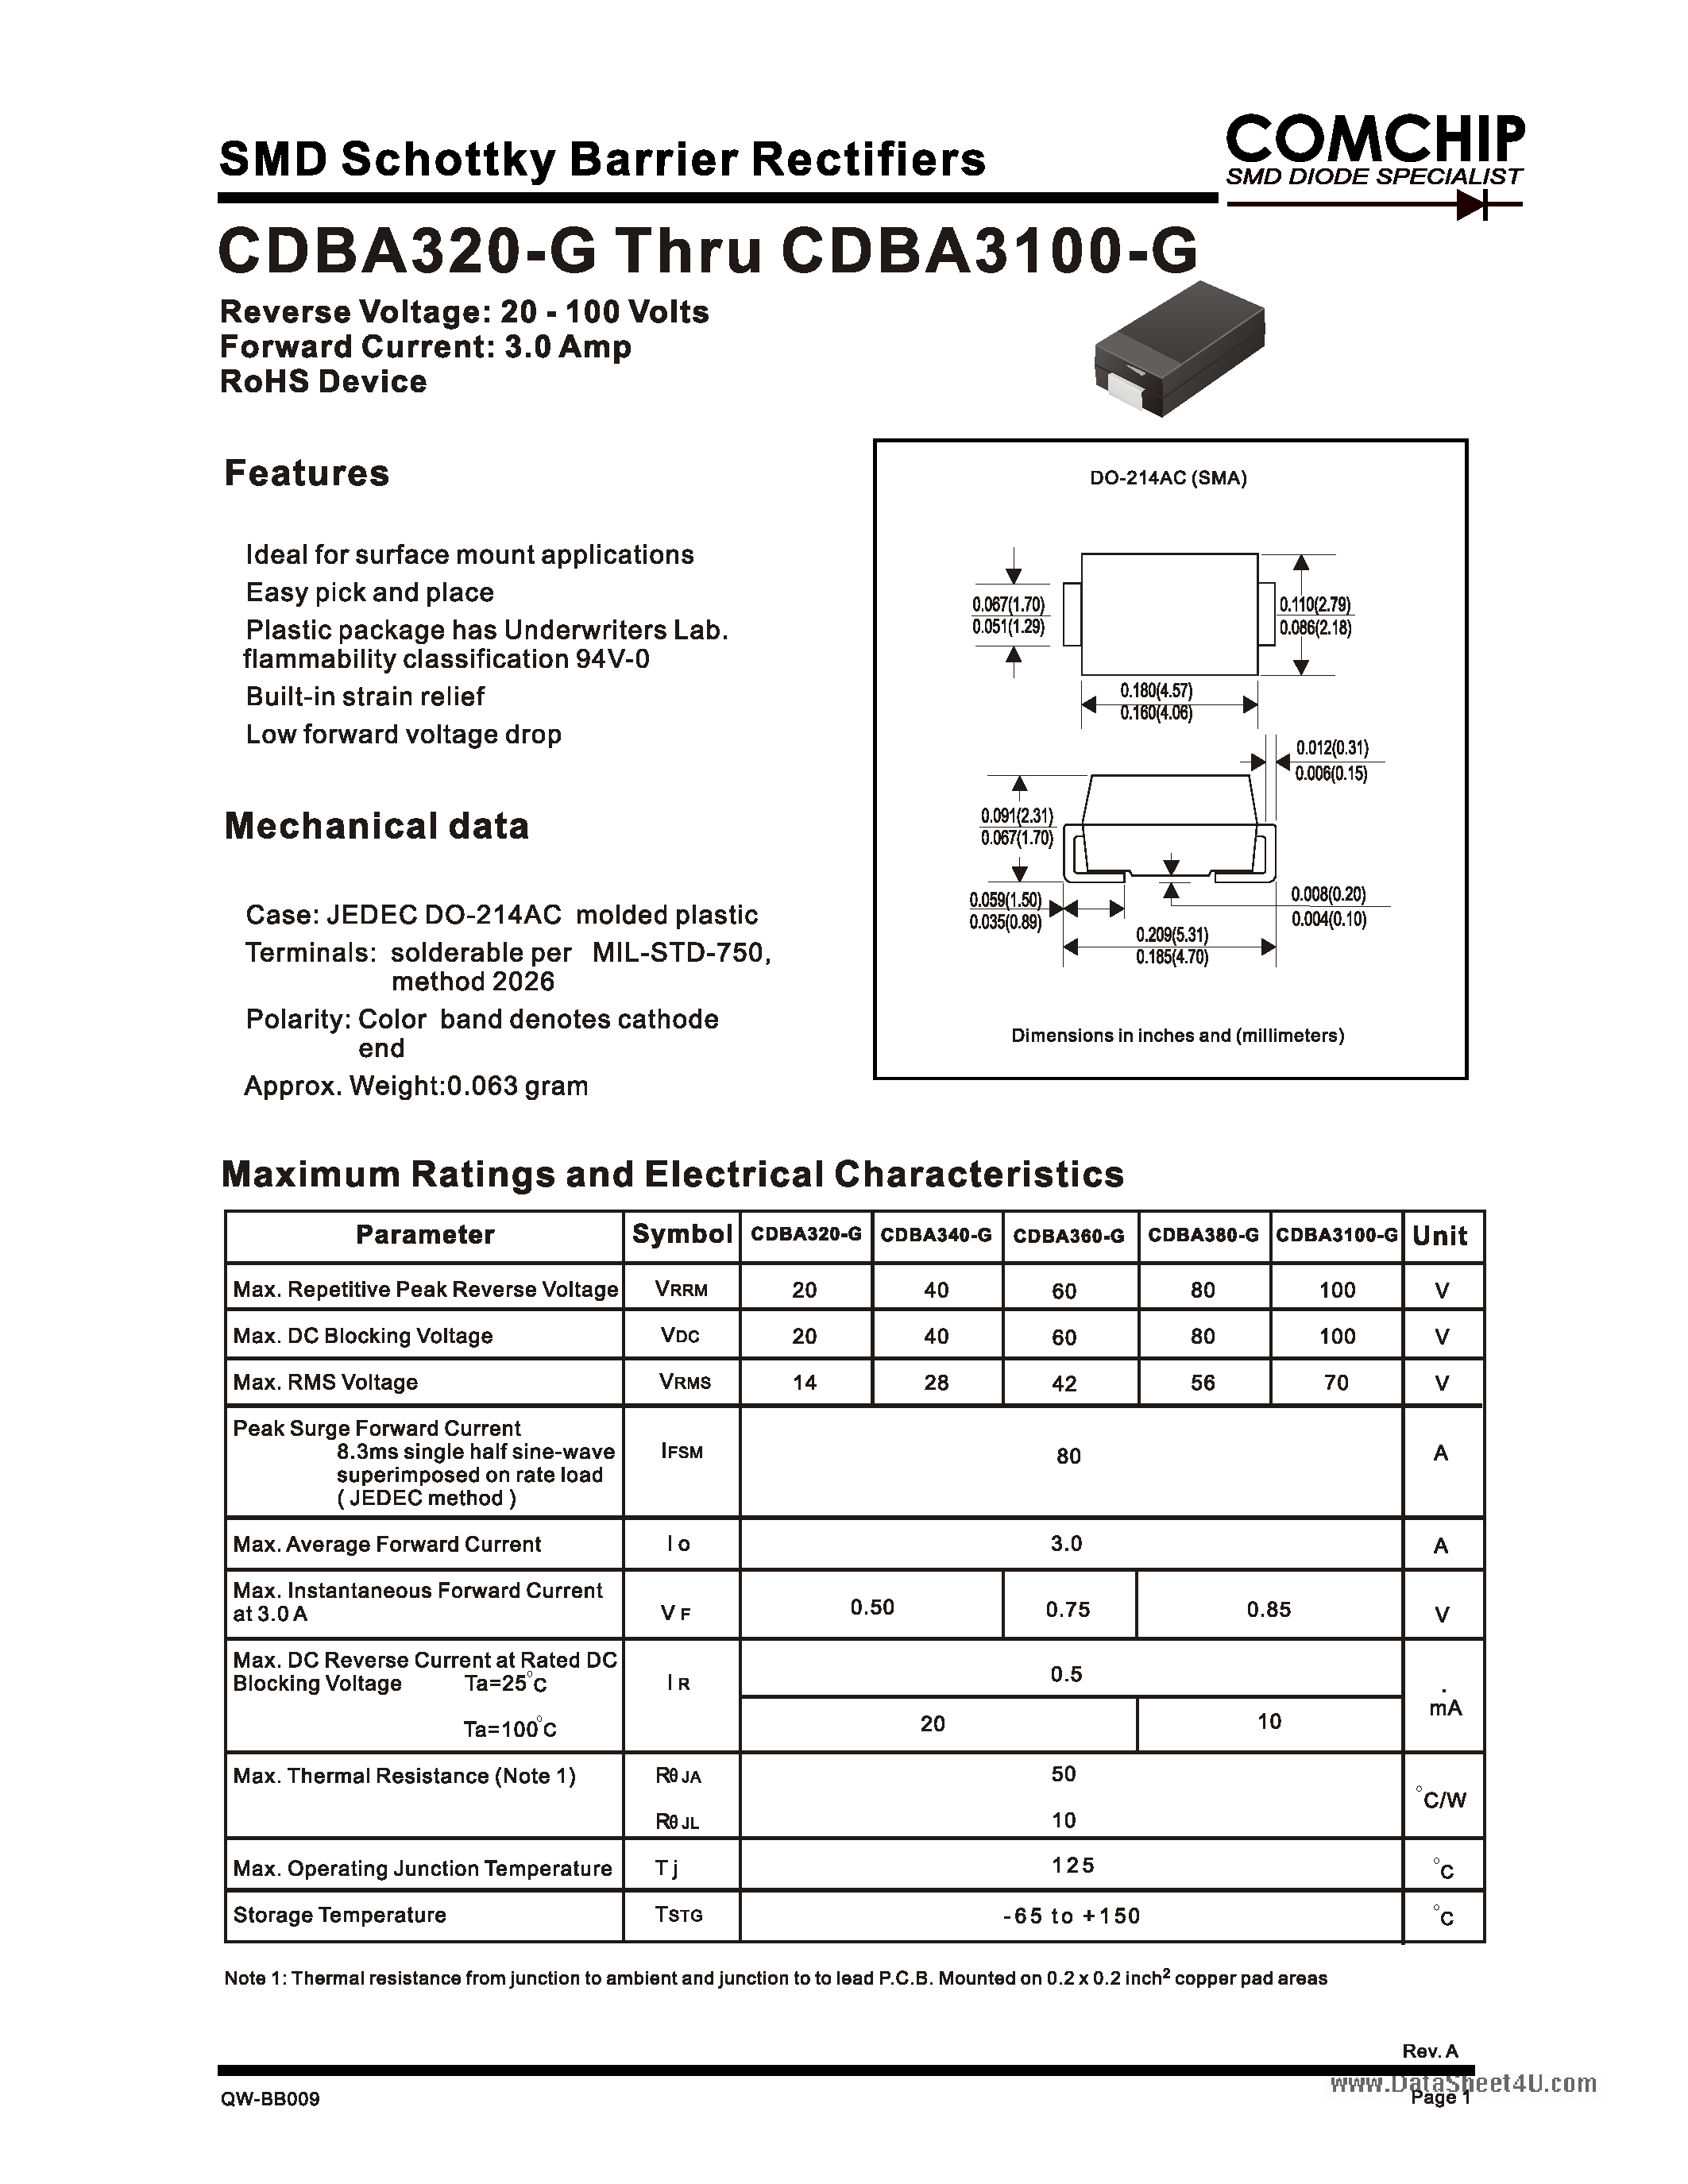 Datasheet CDBA3100-G - (CDBA320-G - CDBA3100-G) SMD sChottky Barrier Rectifiers page 1